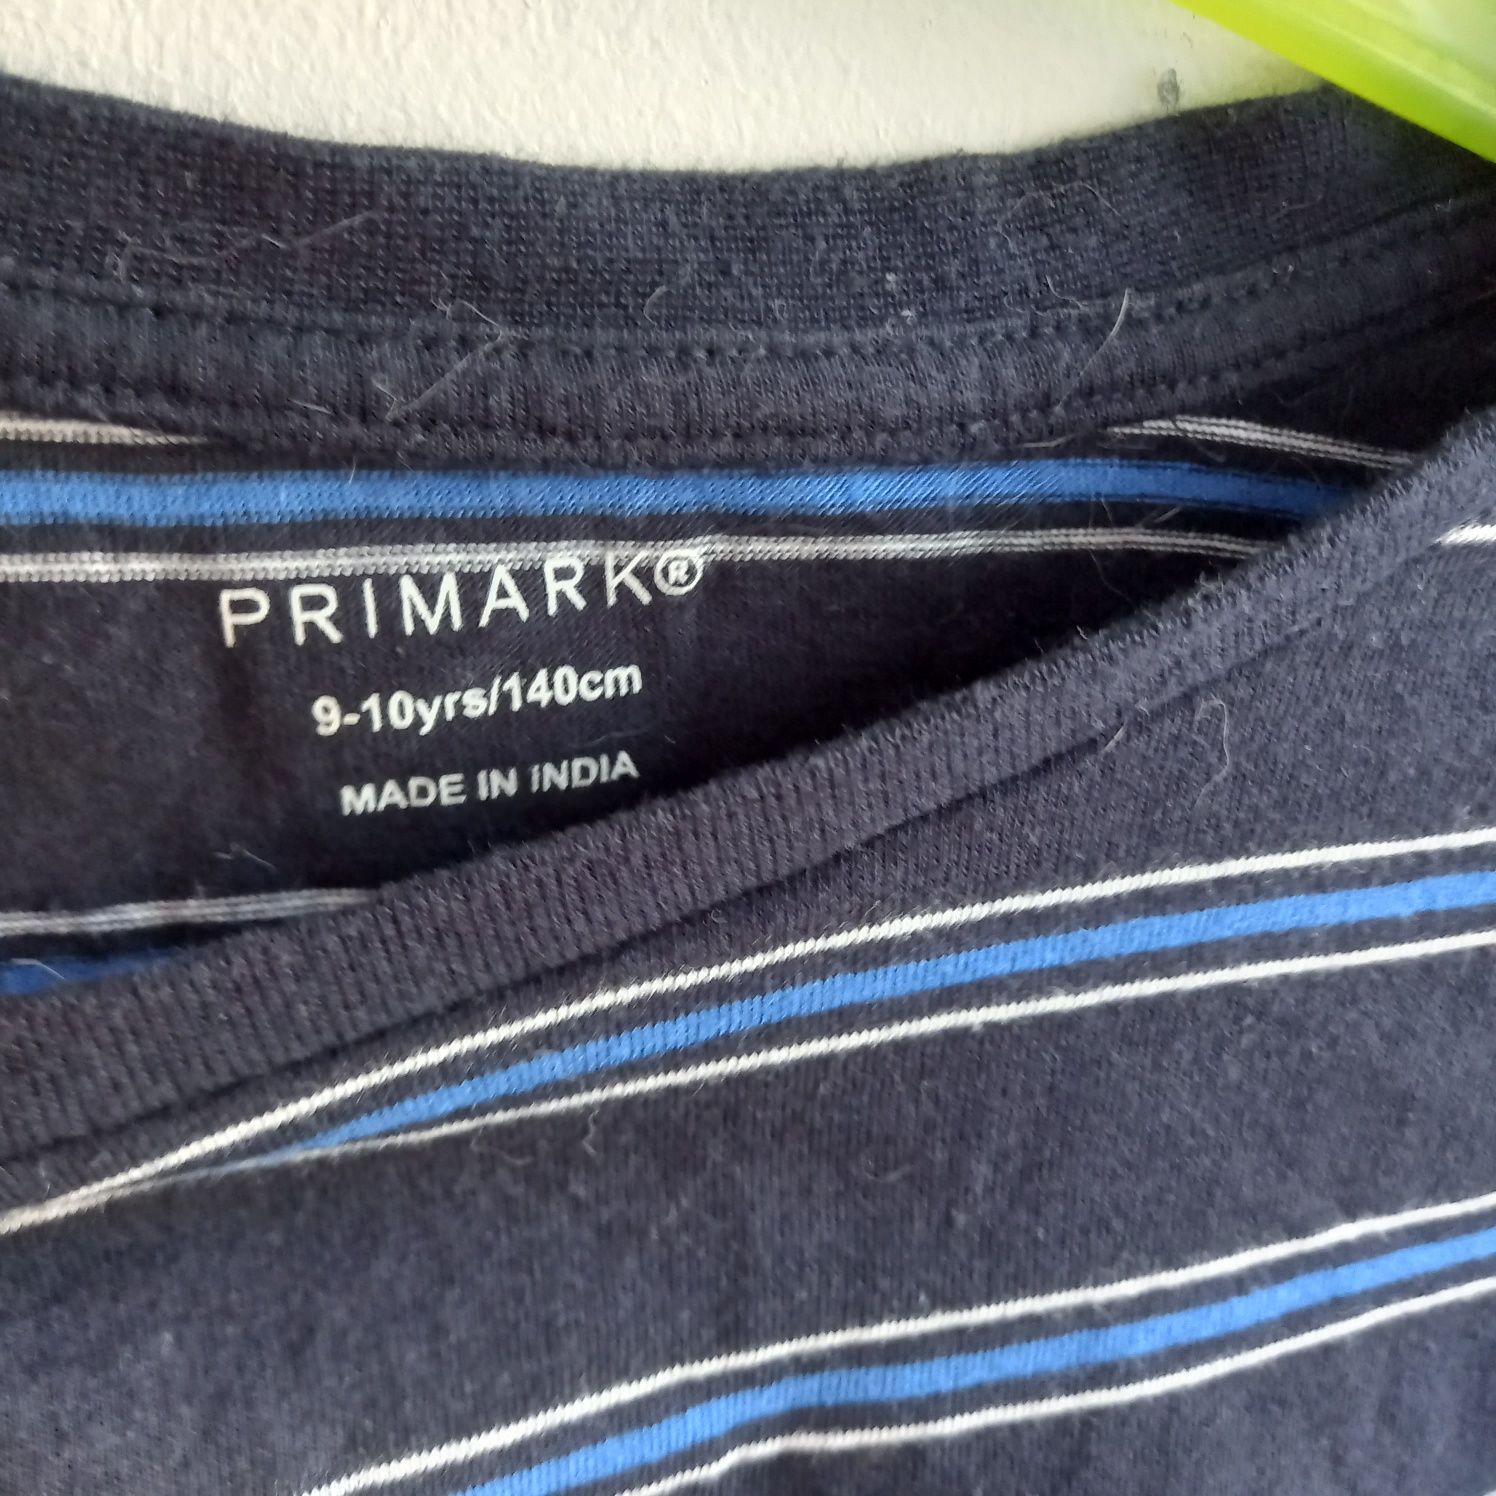 Cool Club 140cm bluza Smyk Primark w paski